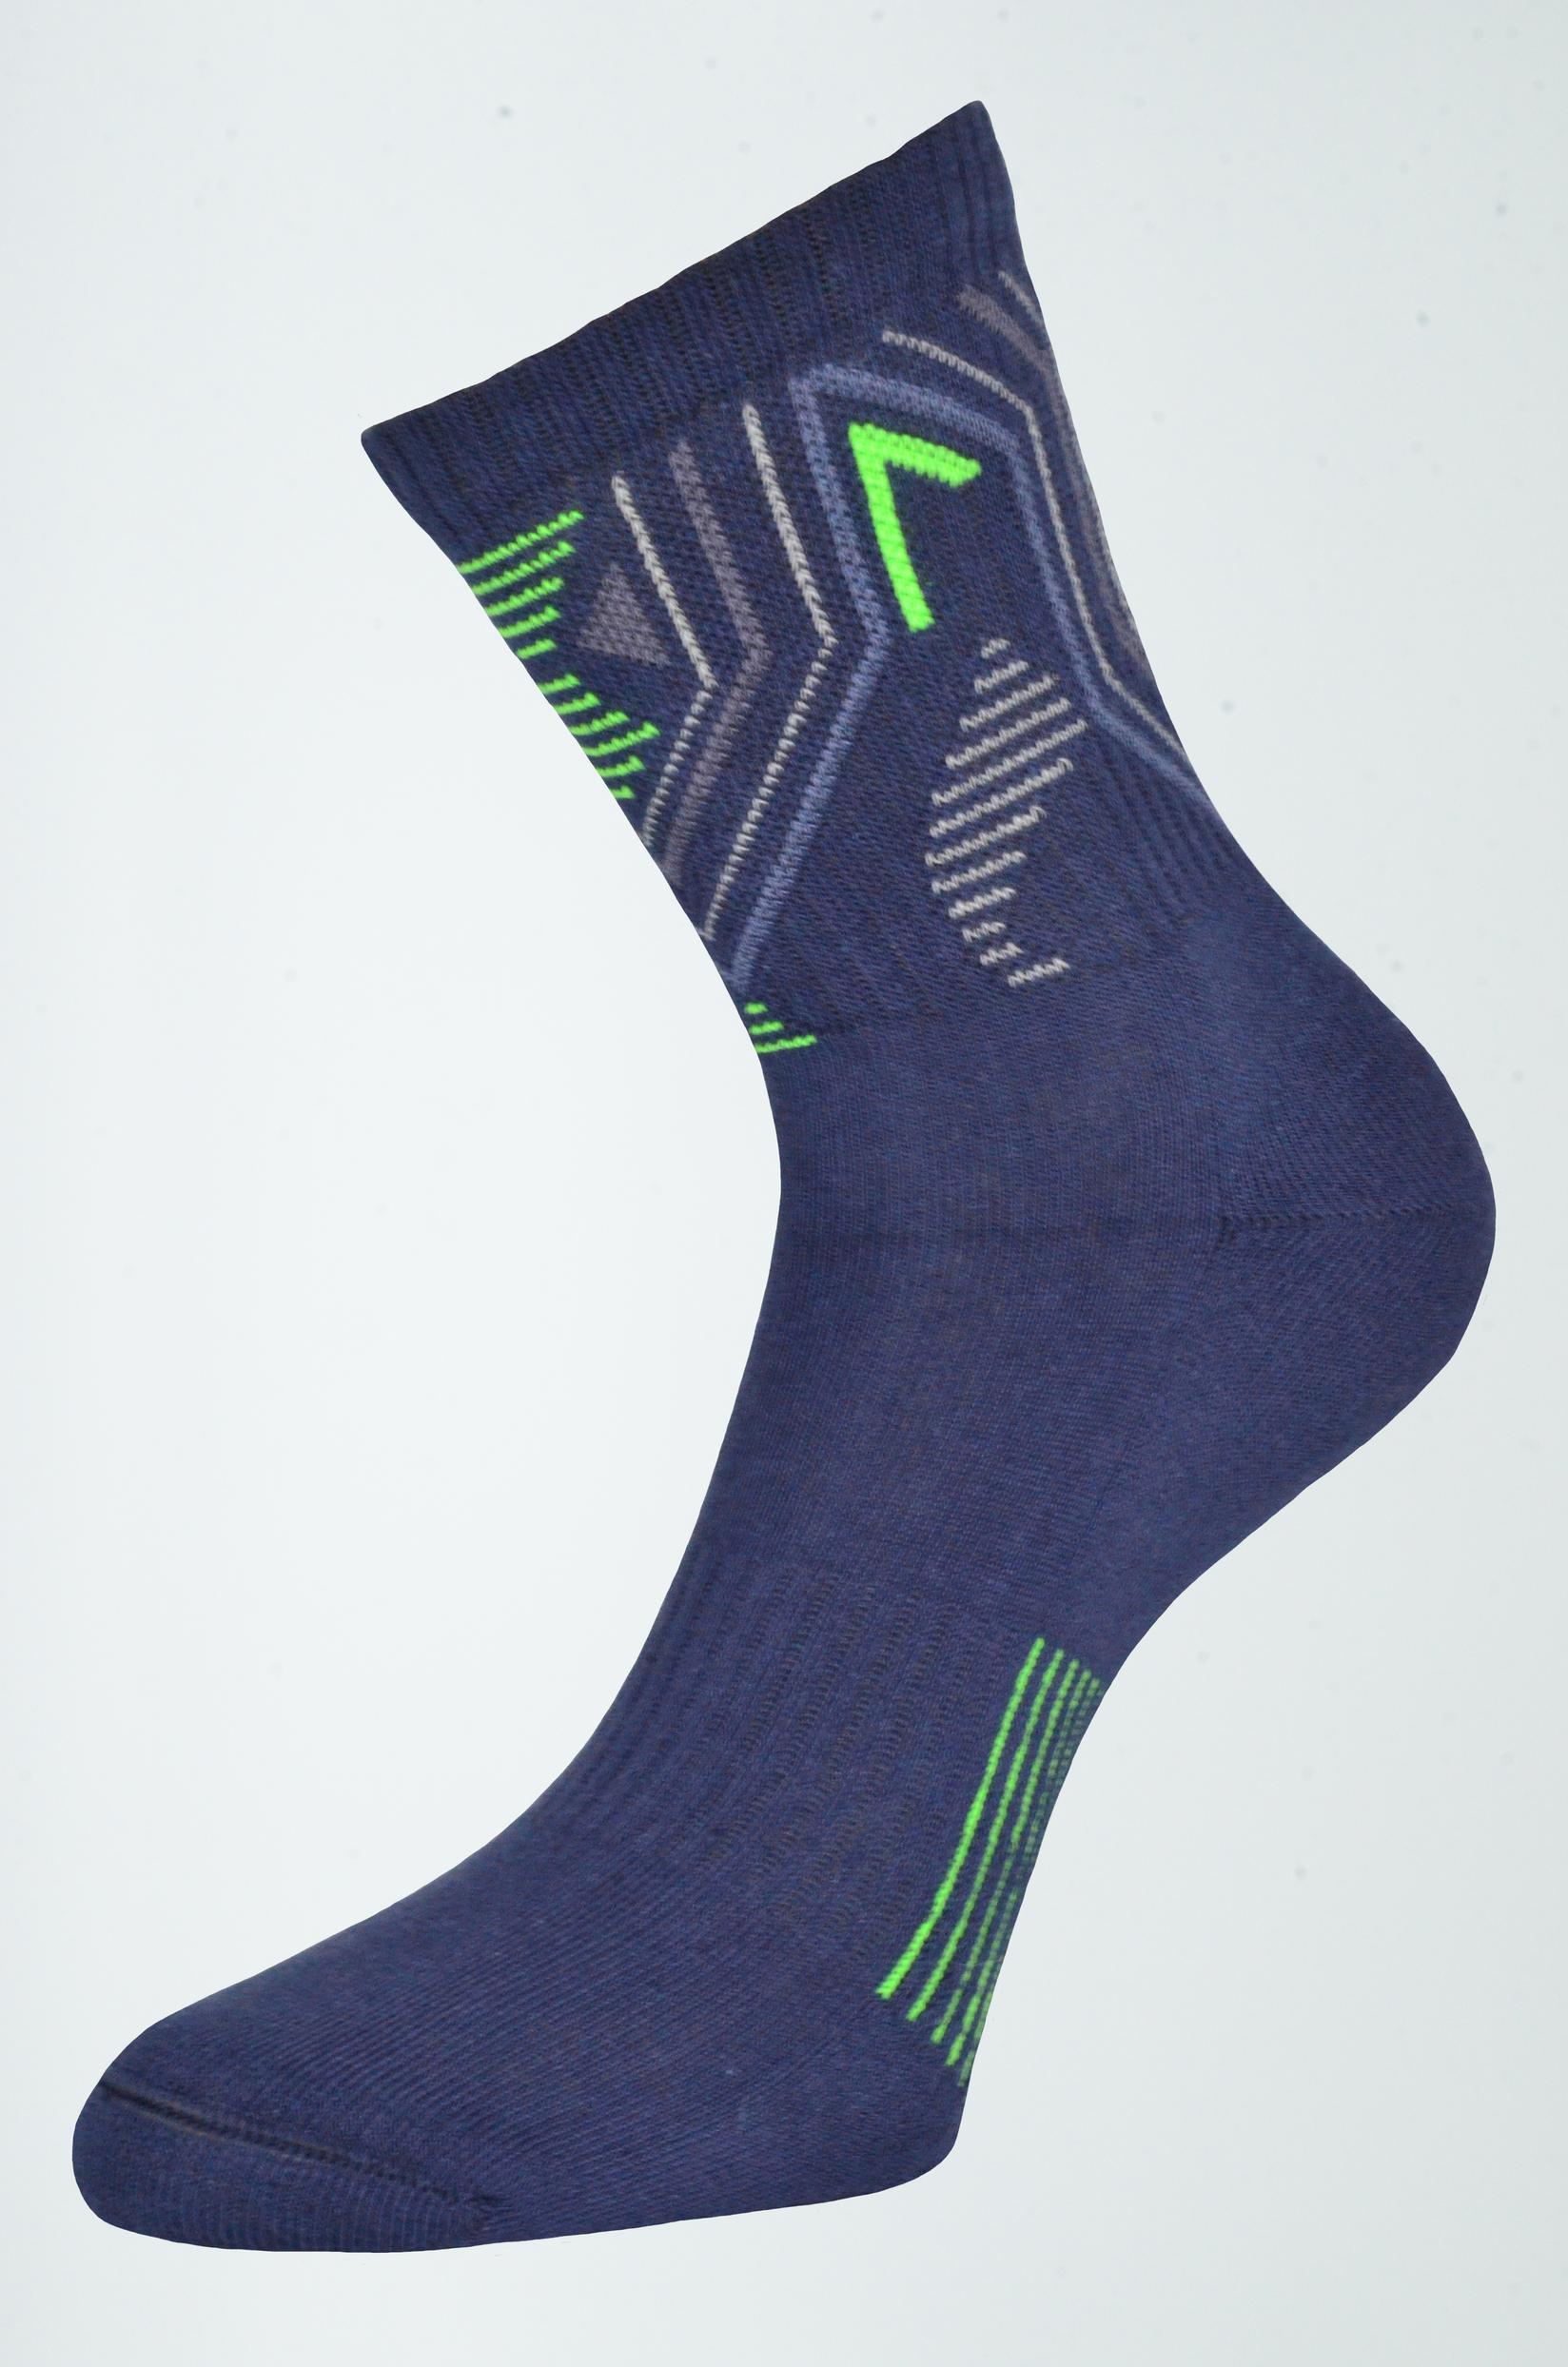 Selected image for GERBI Sportske čarape Sport Style  39-41 m9 teget